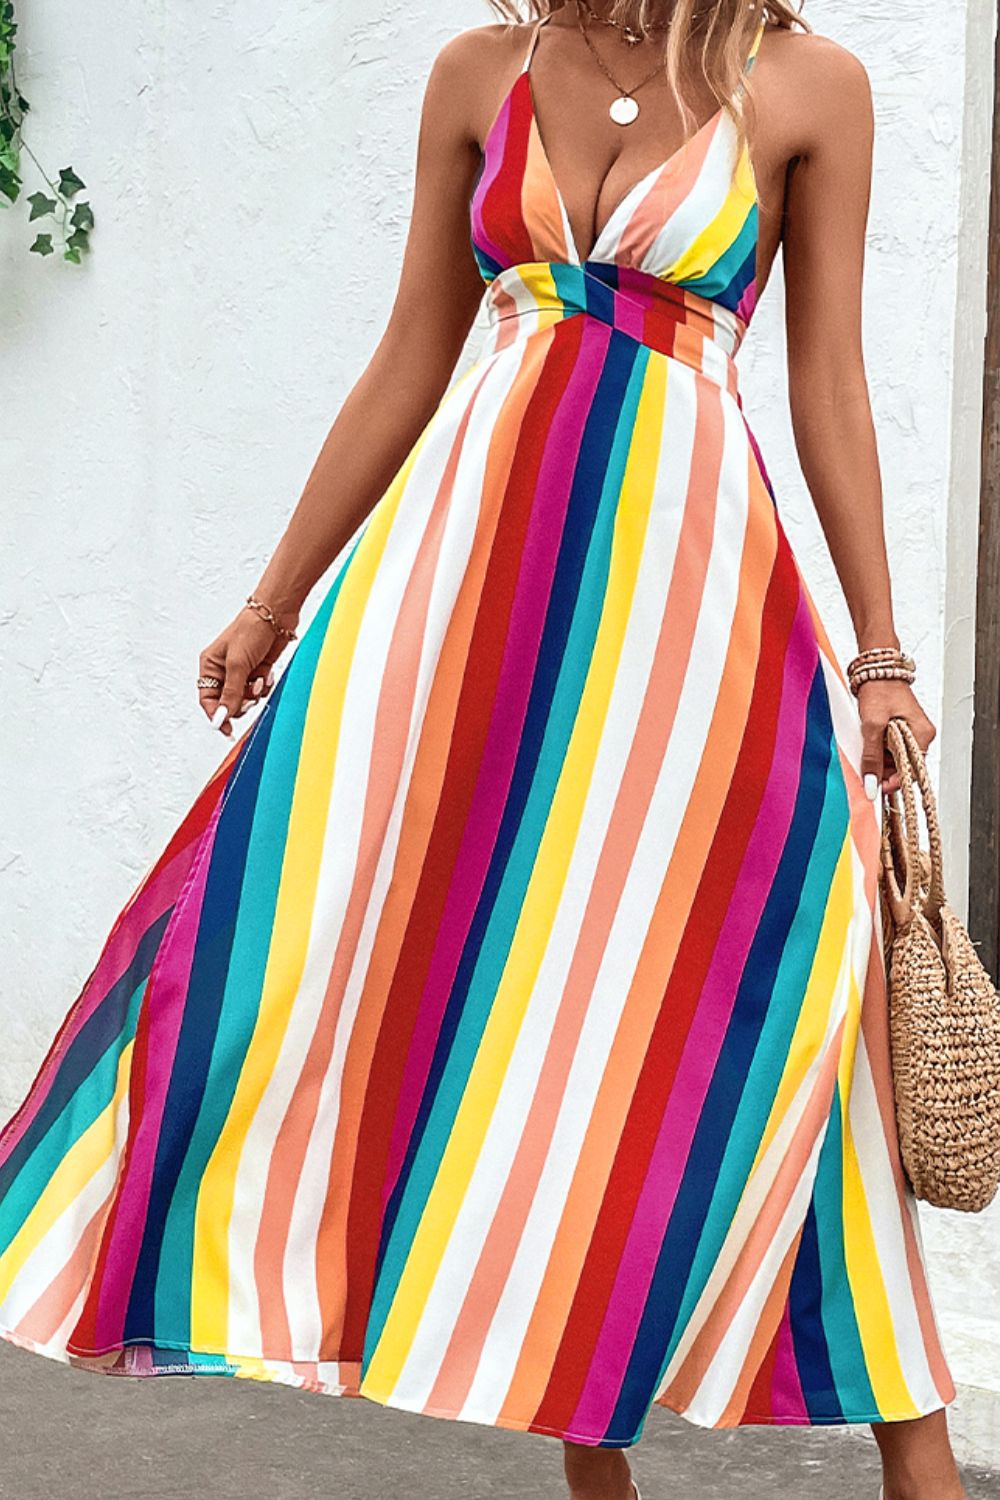 Rainbow Dress With Crisscross Straps